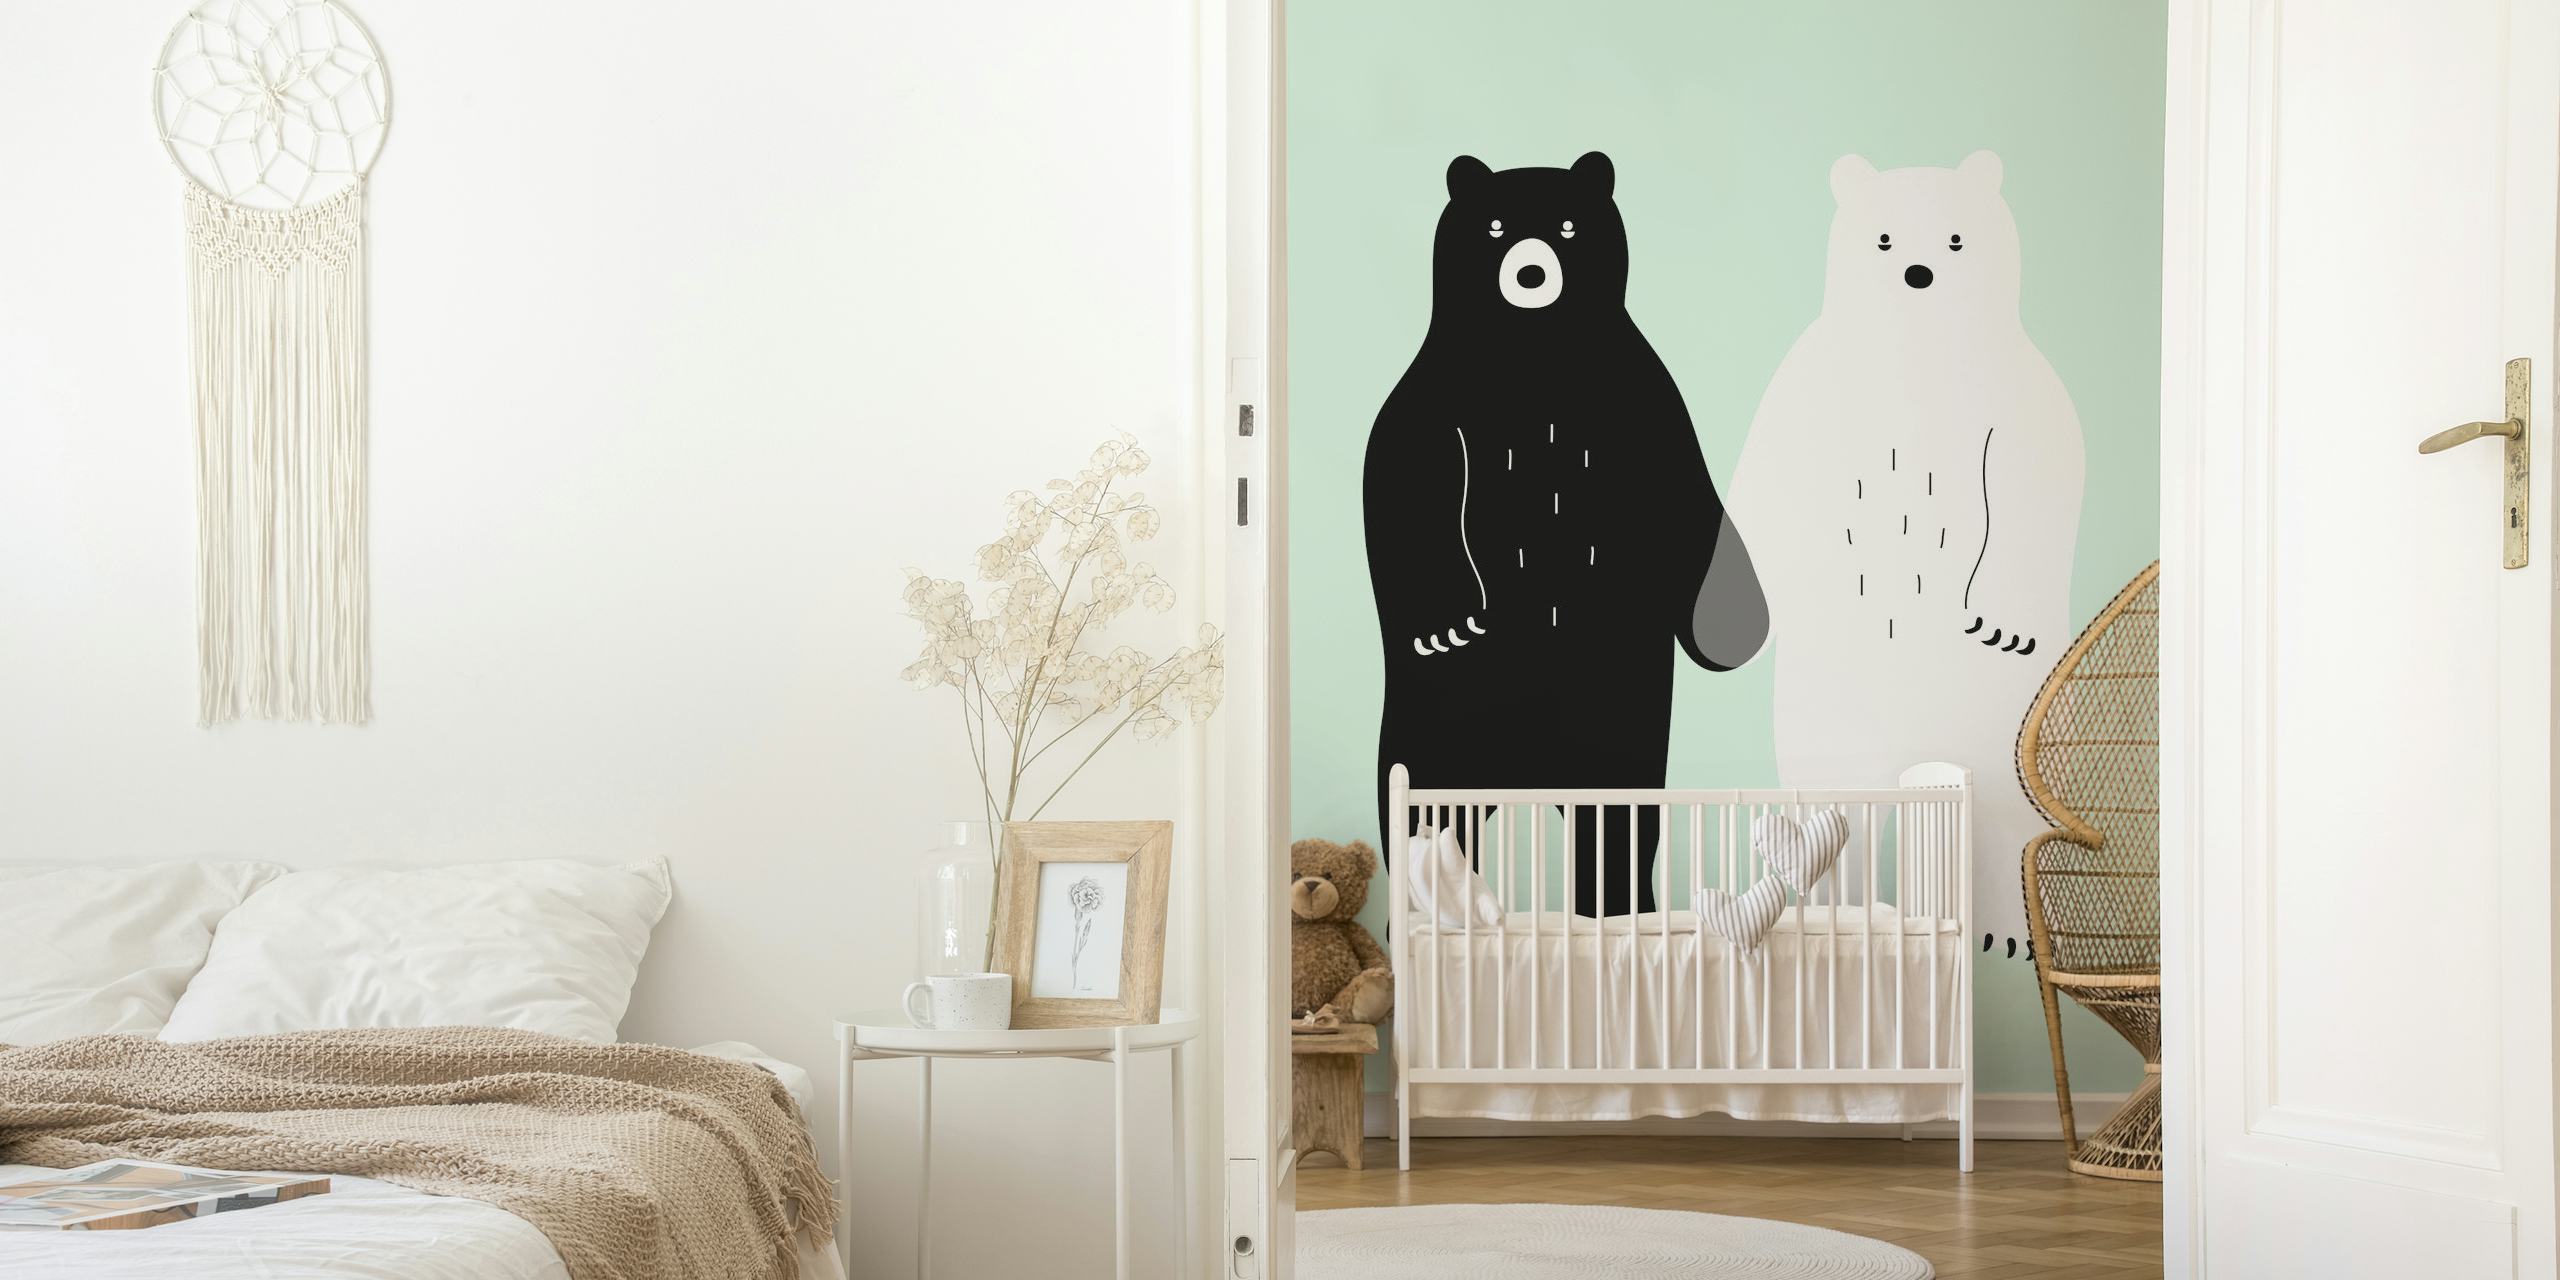 Two Bear wallpaper